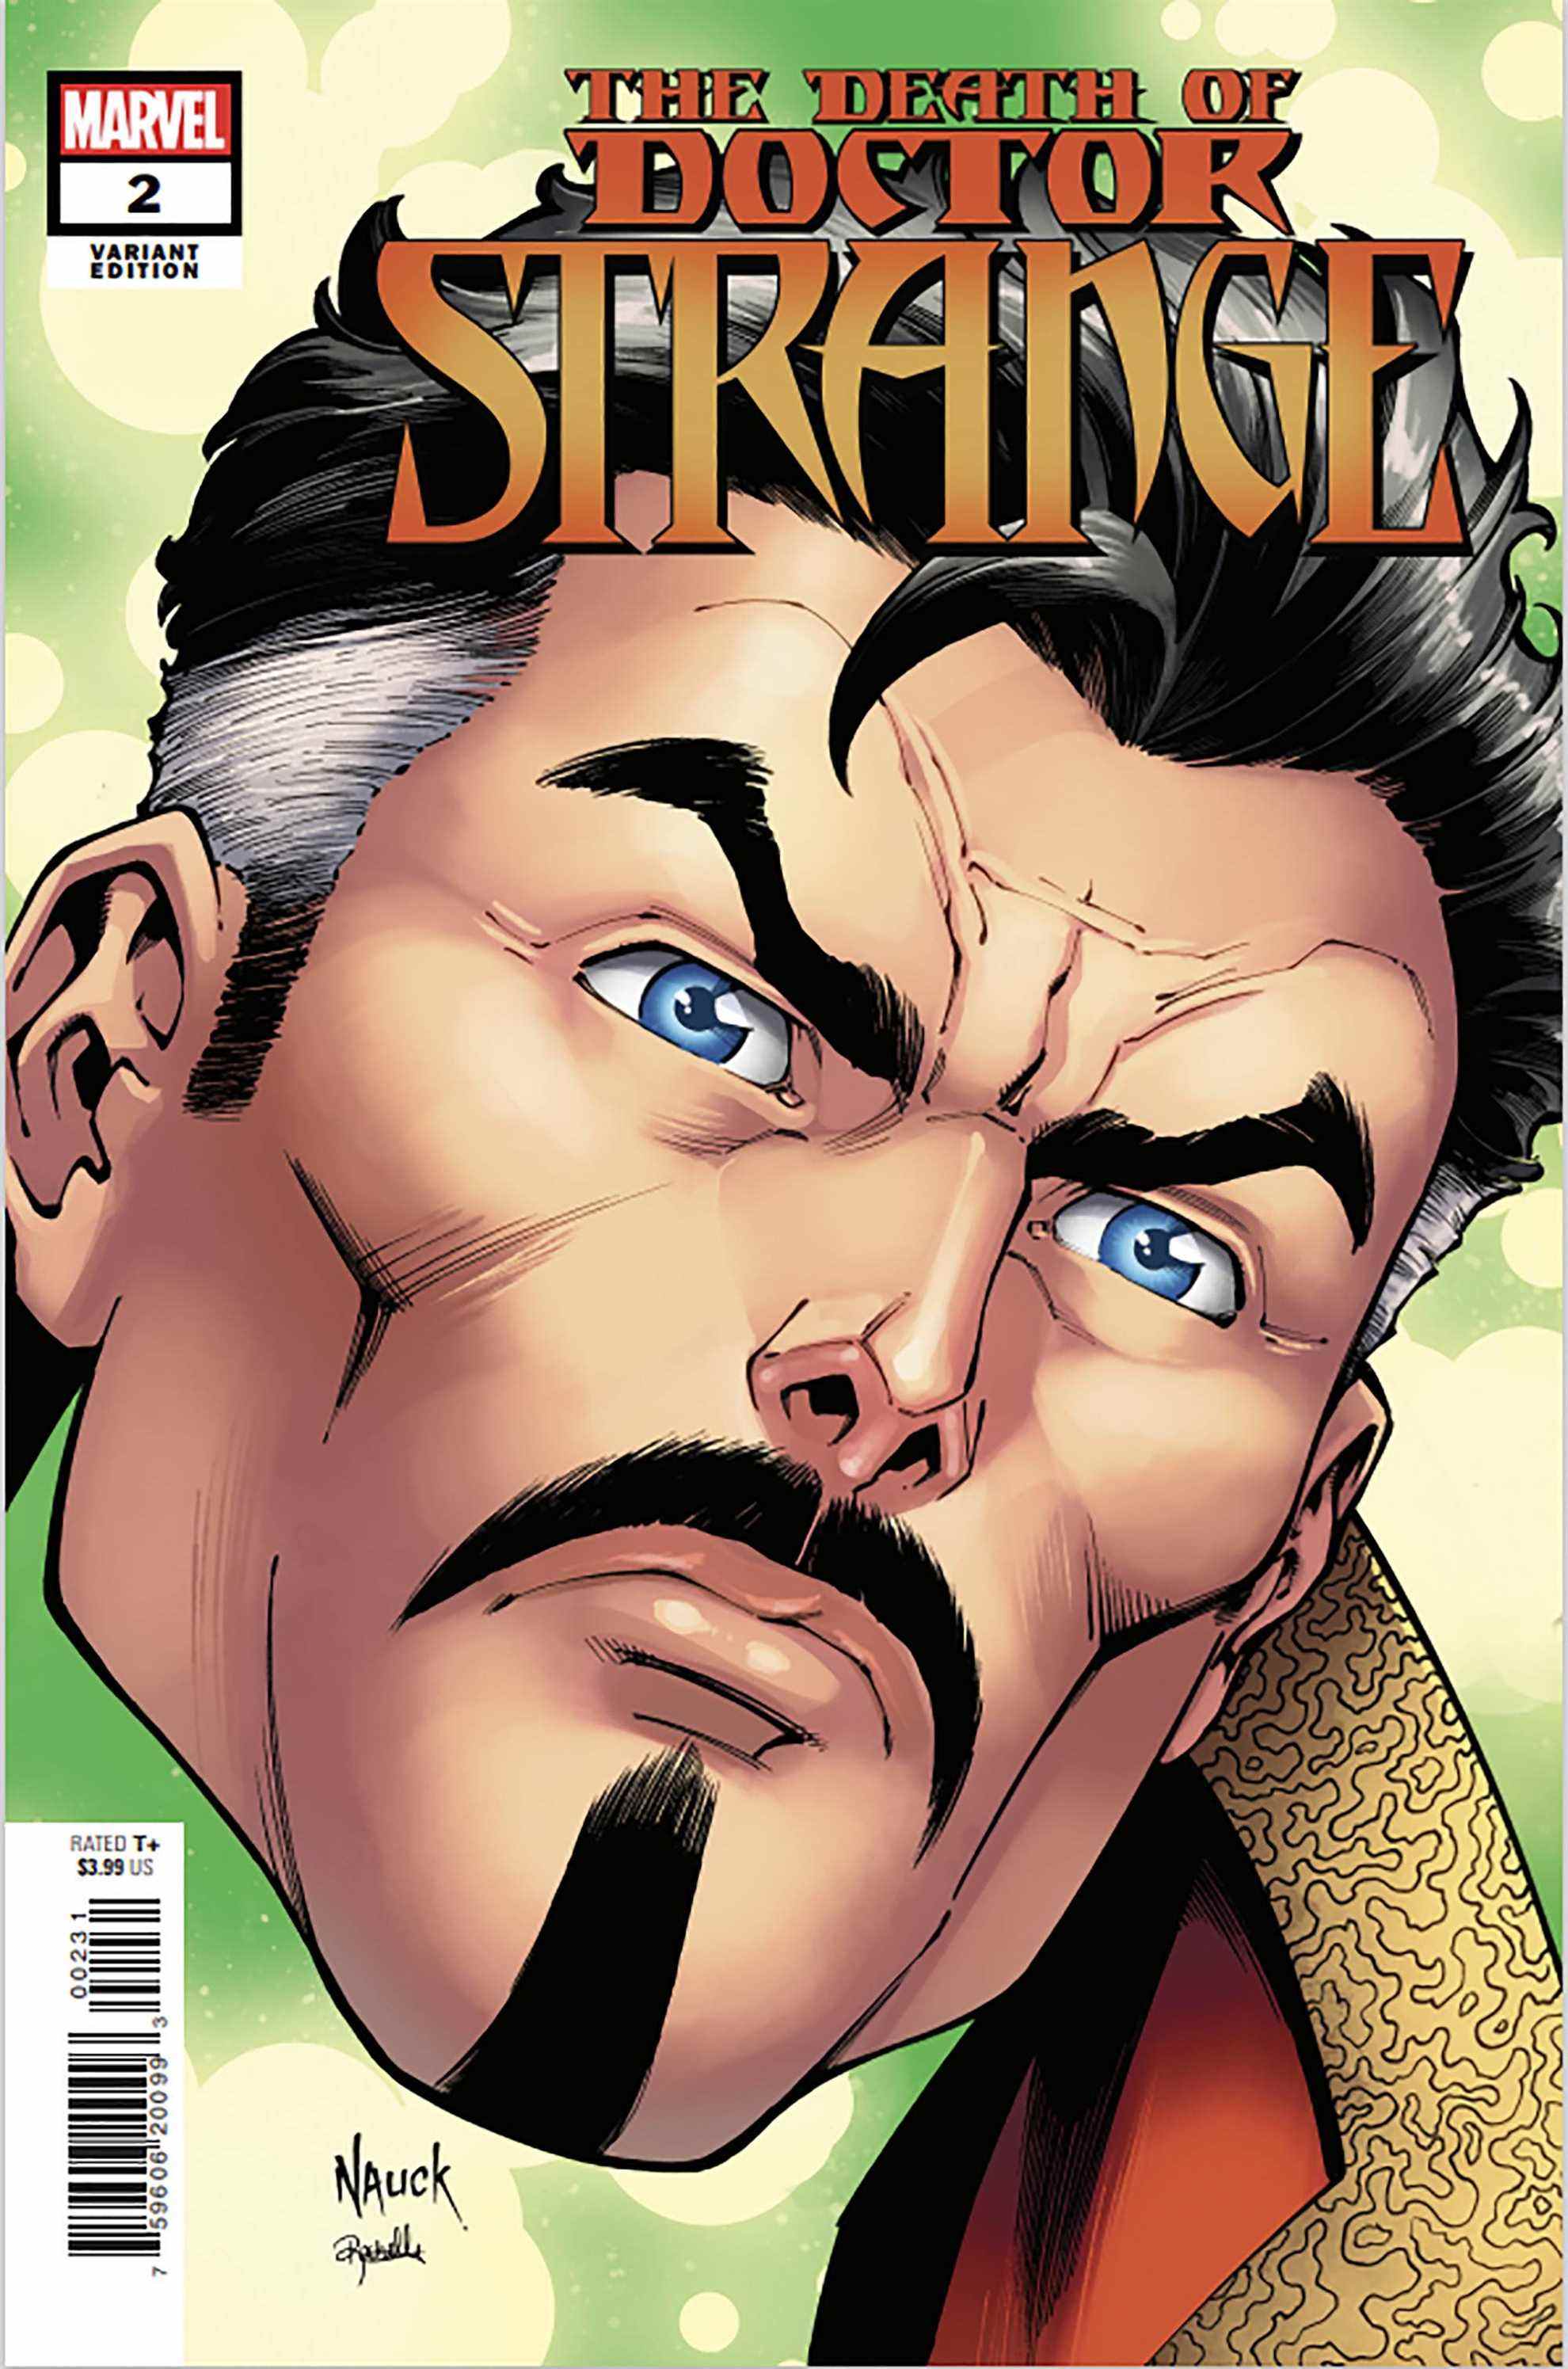 Couverture de la variante Death of Doctor Strange #2